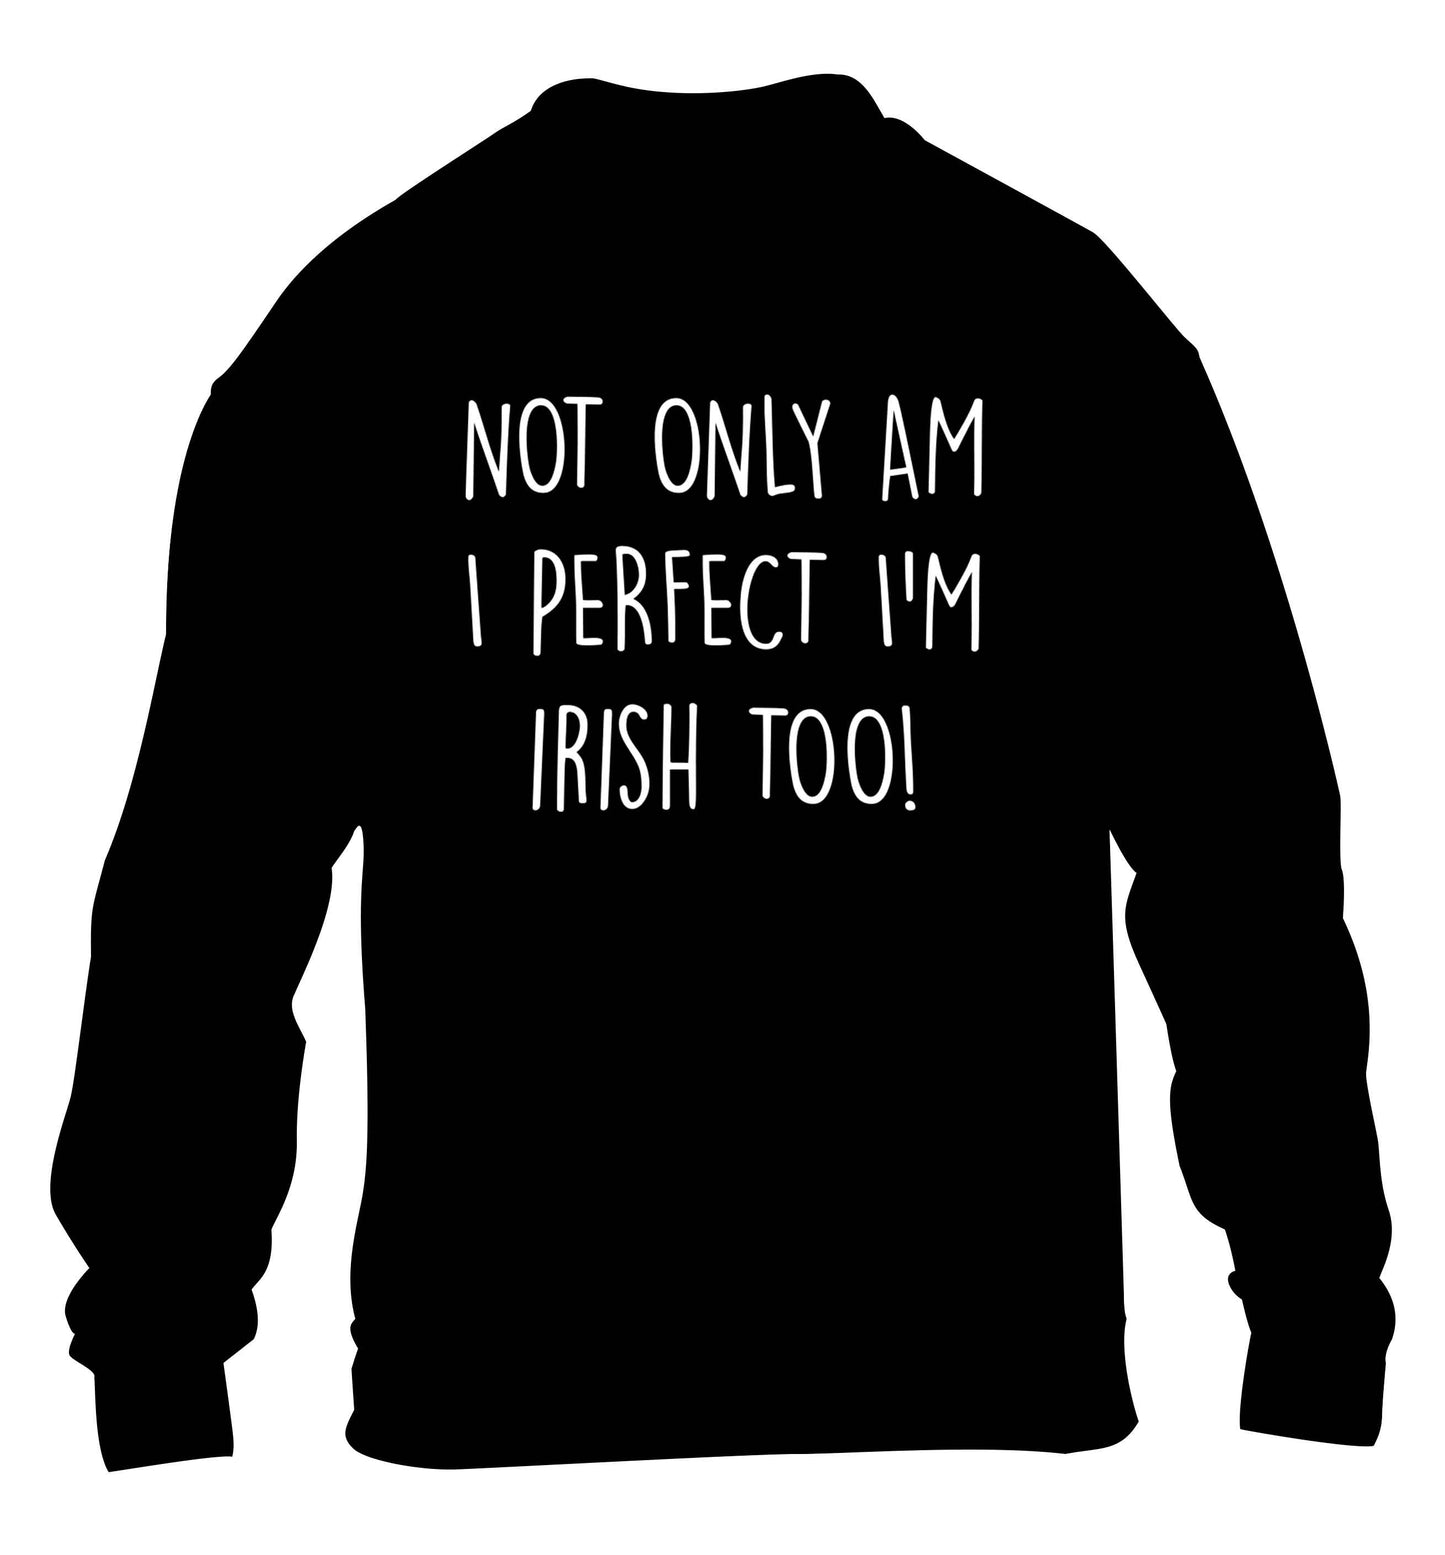 Not only am I perfect I'm Irish too! children's black sweater 12-13 Years